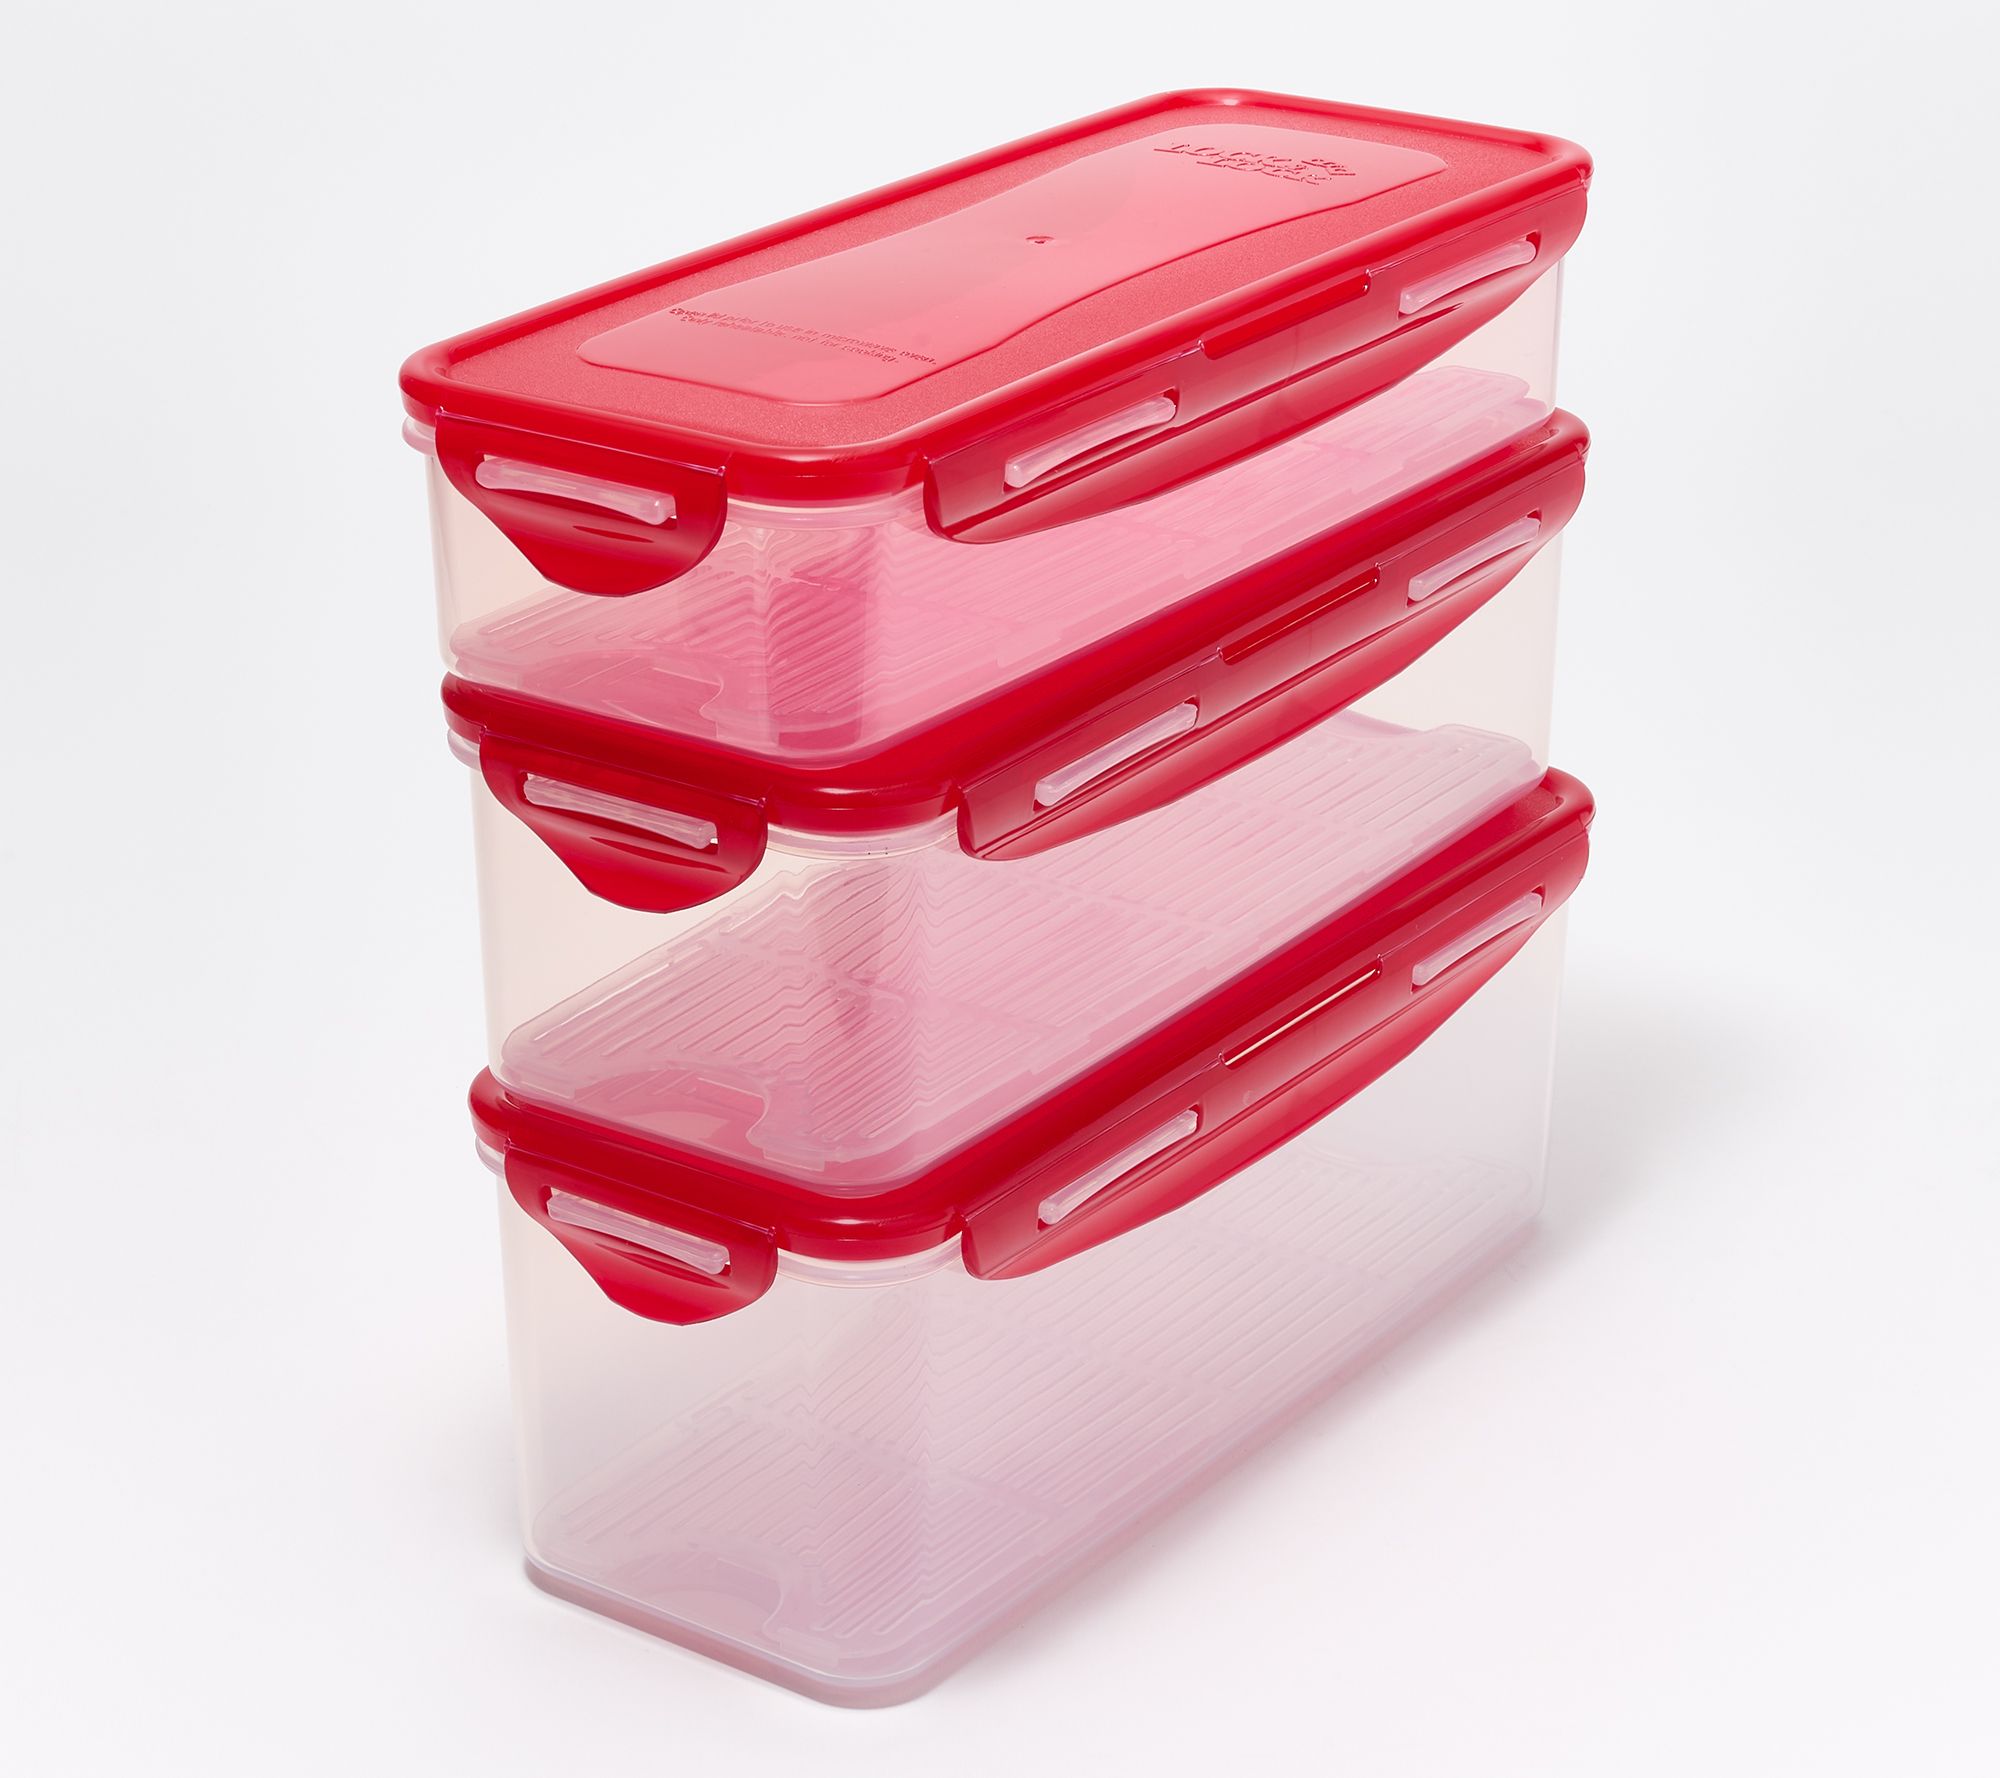 Lock & Lock Serve And Store Round Nesting Storage Set – Red, 4pc